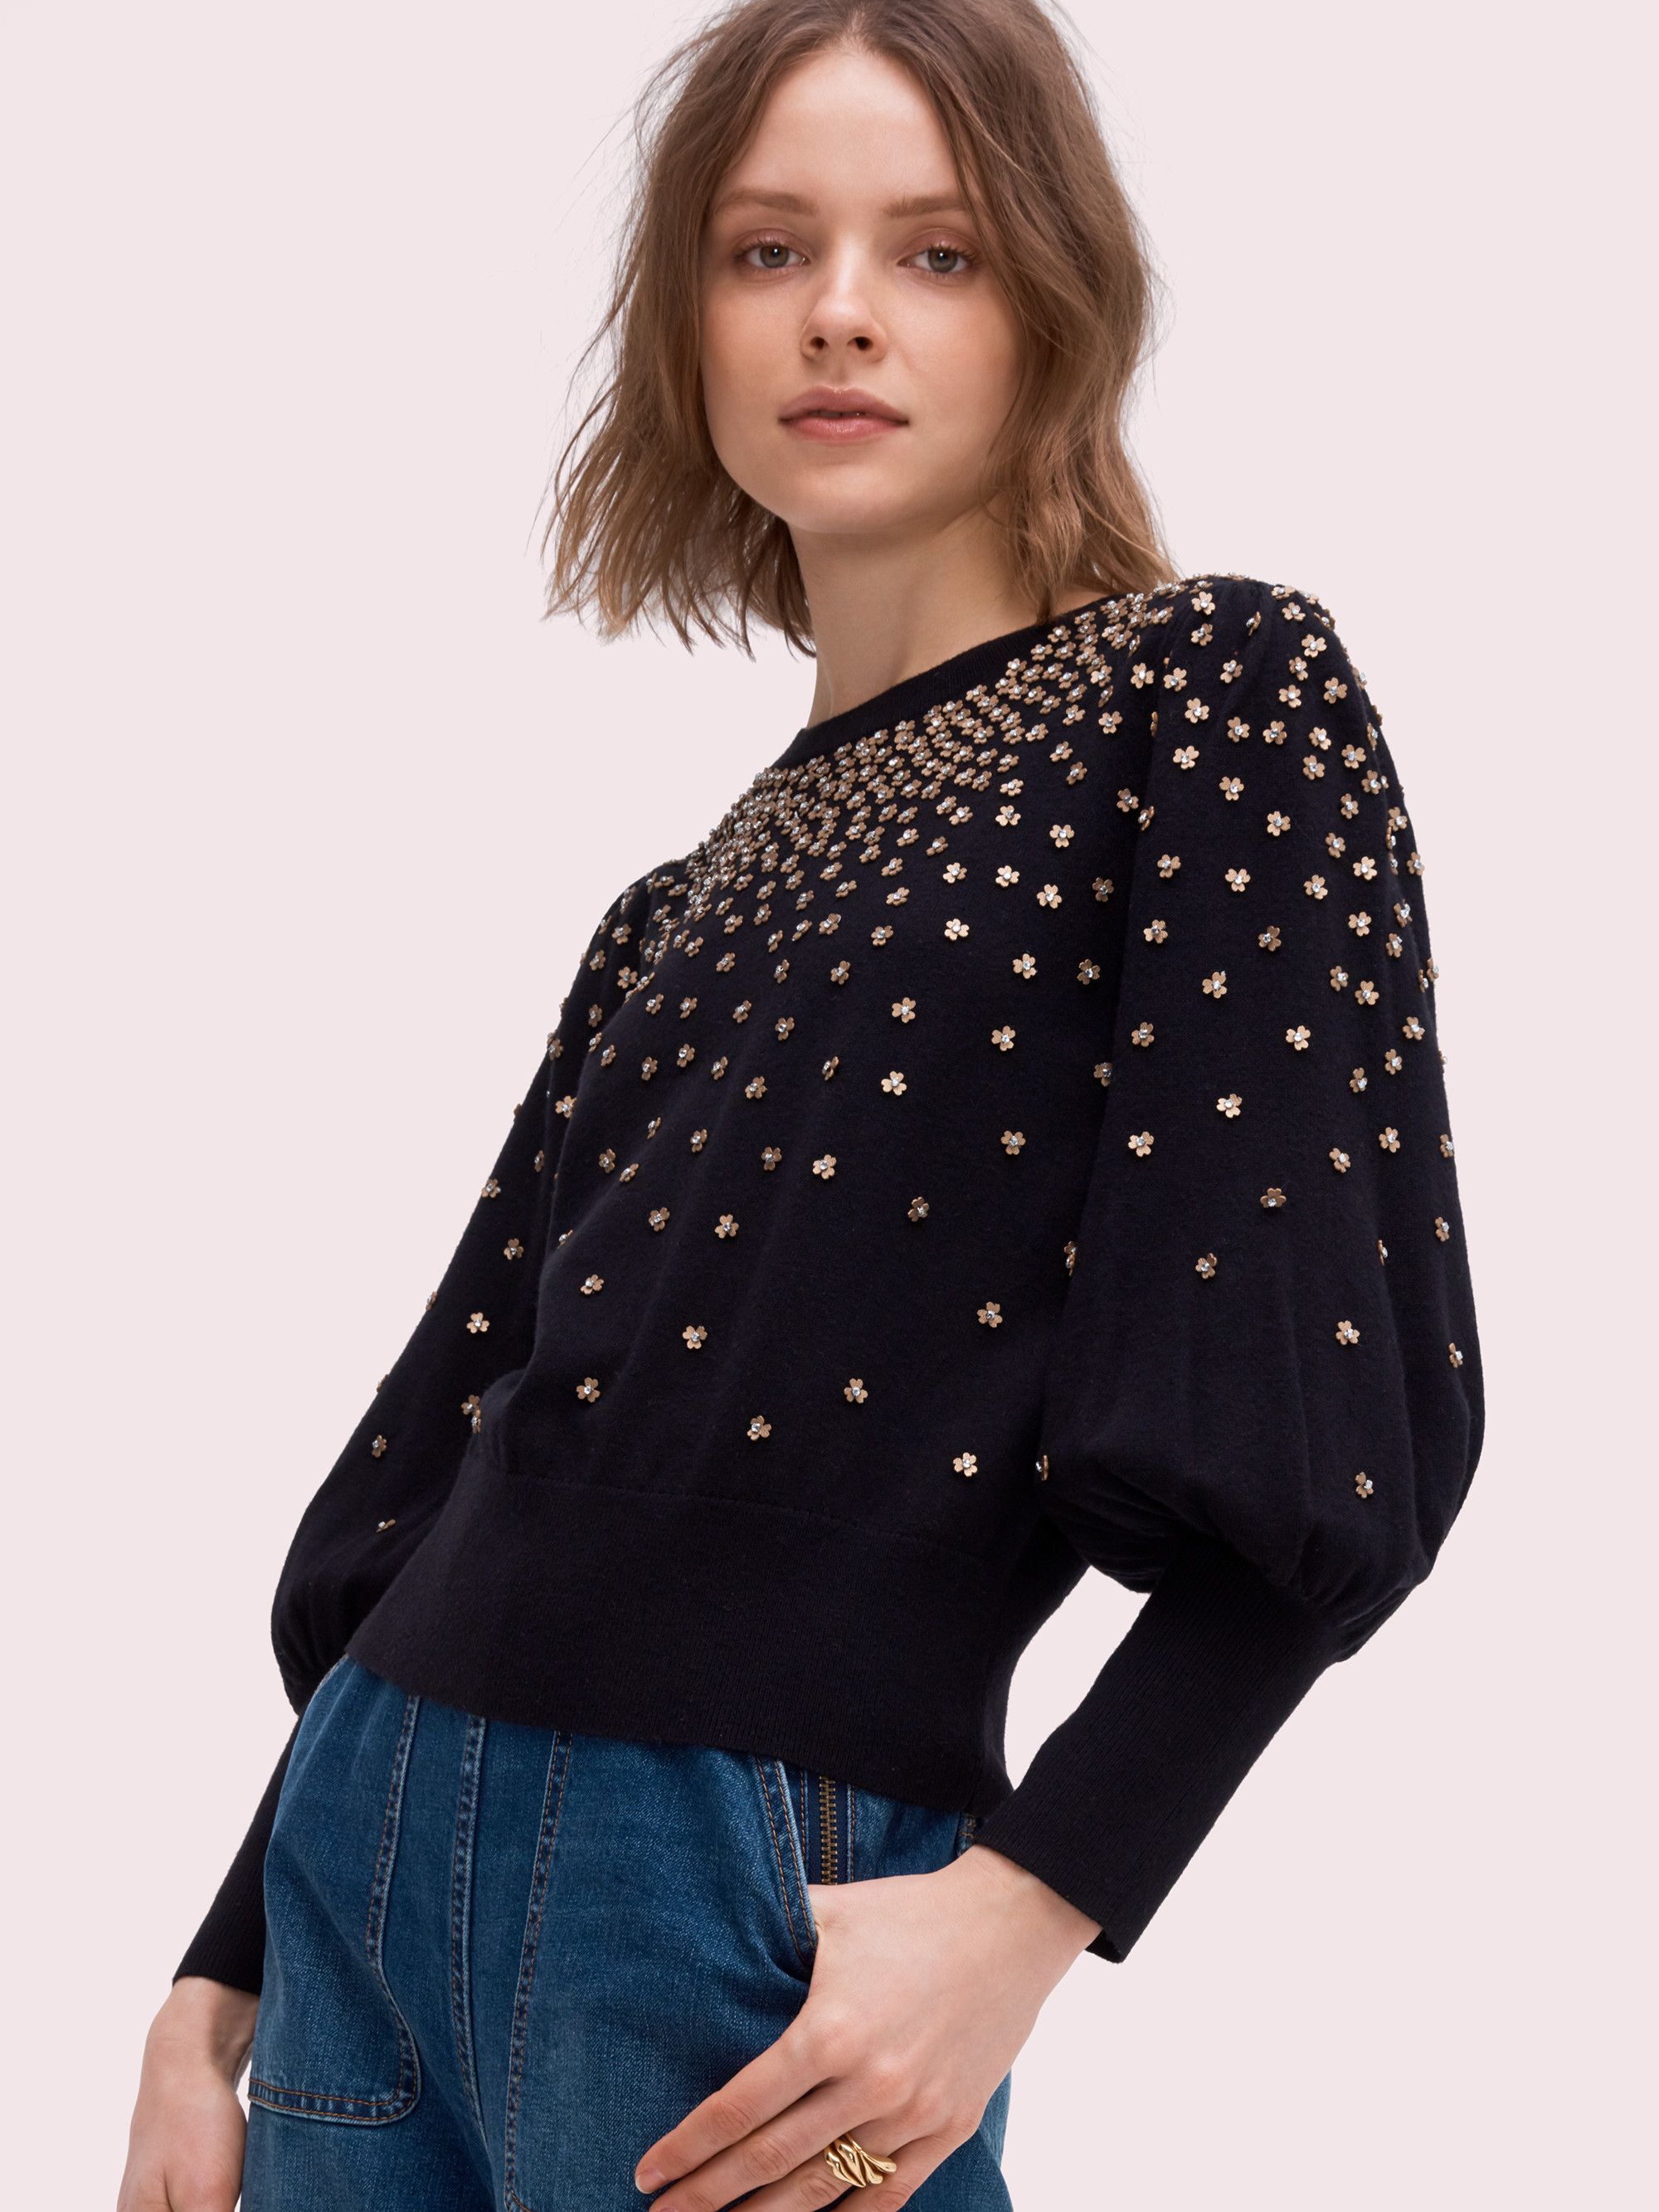 Women's black multi crystal embellished sweater | Kate Spade New York NL